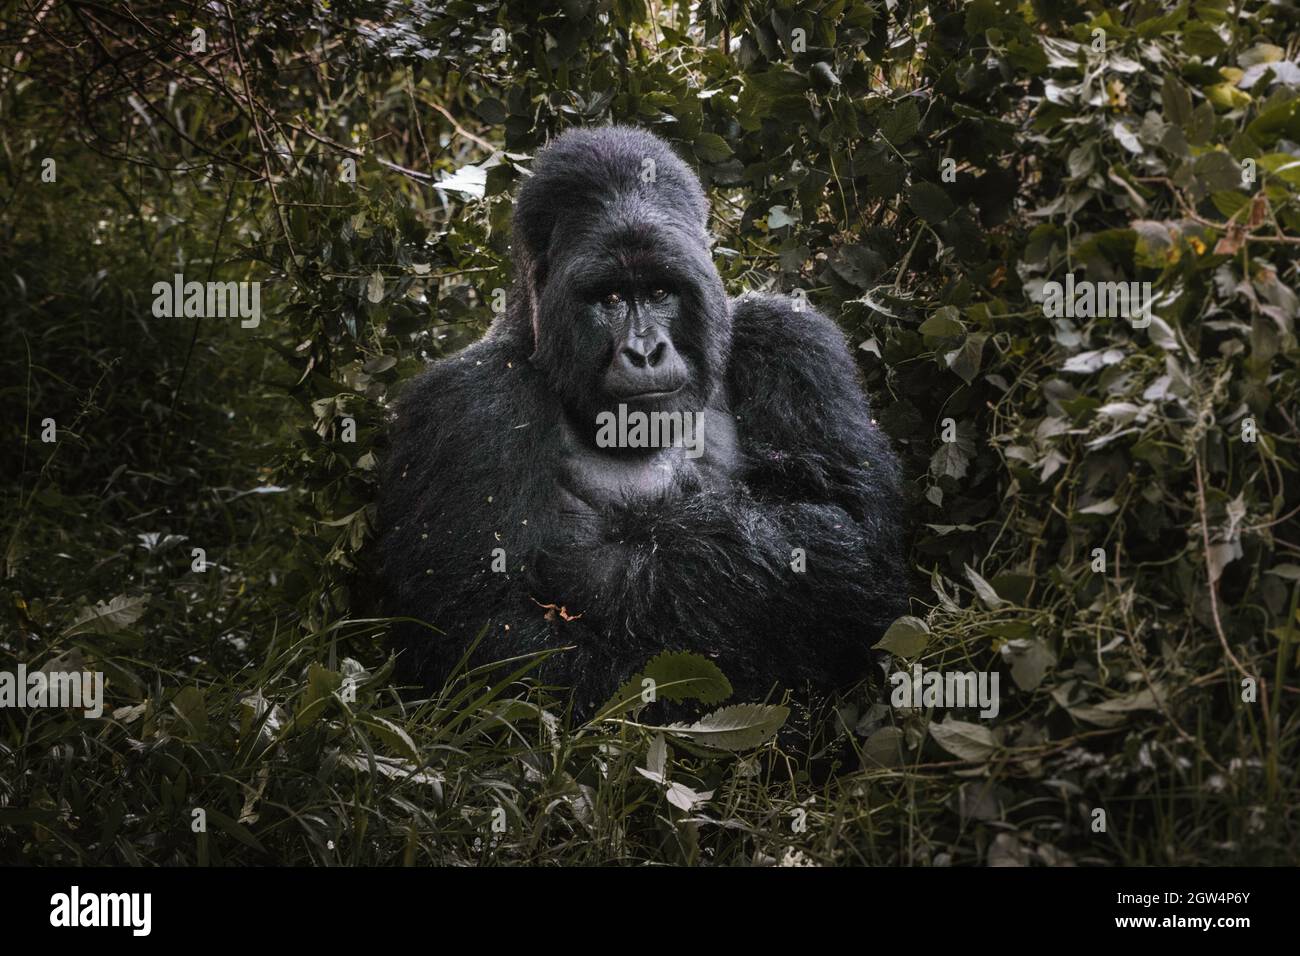 Alpha Gorilla In The Jungle Of Uganda. Stock Photo